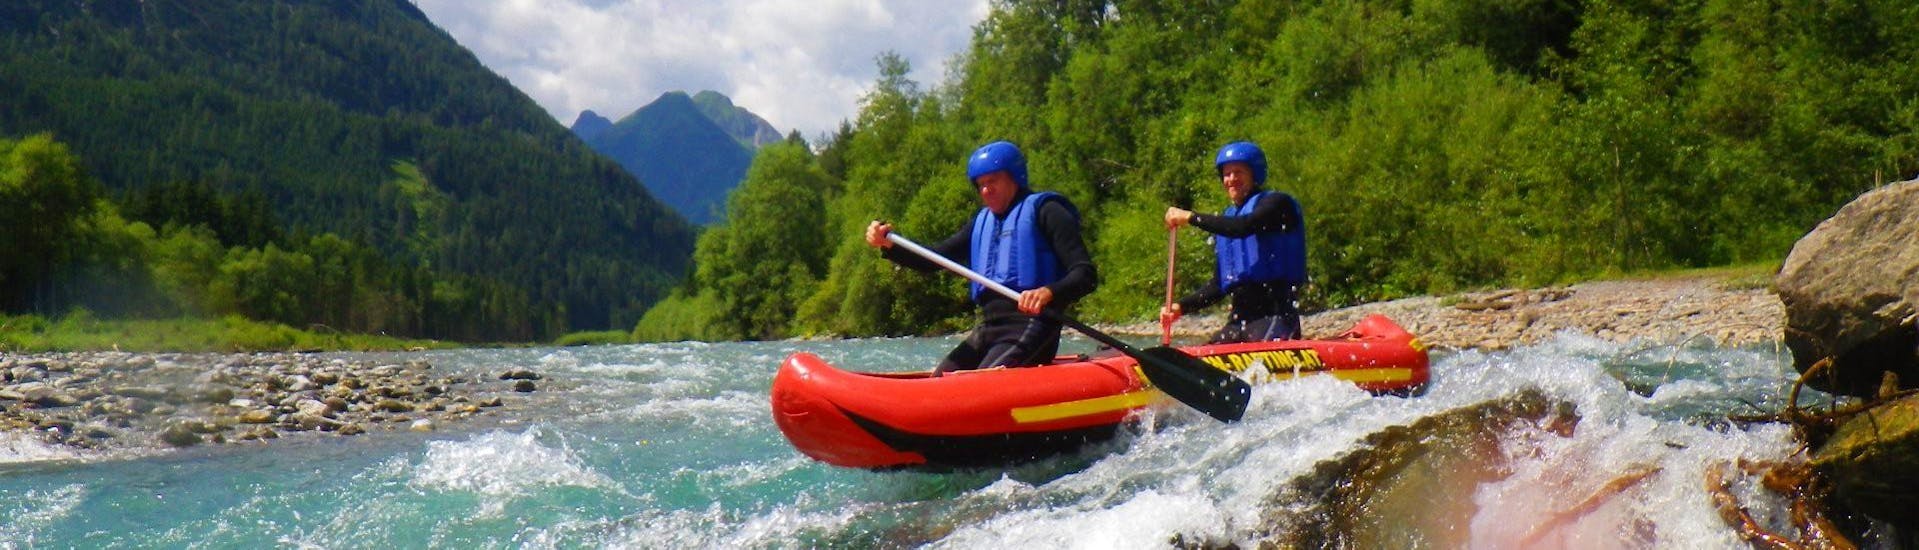 Rafting avanzado en Häselgehr - Tiroler Lech Nature Park.